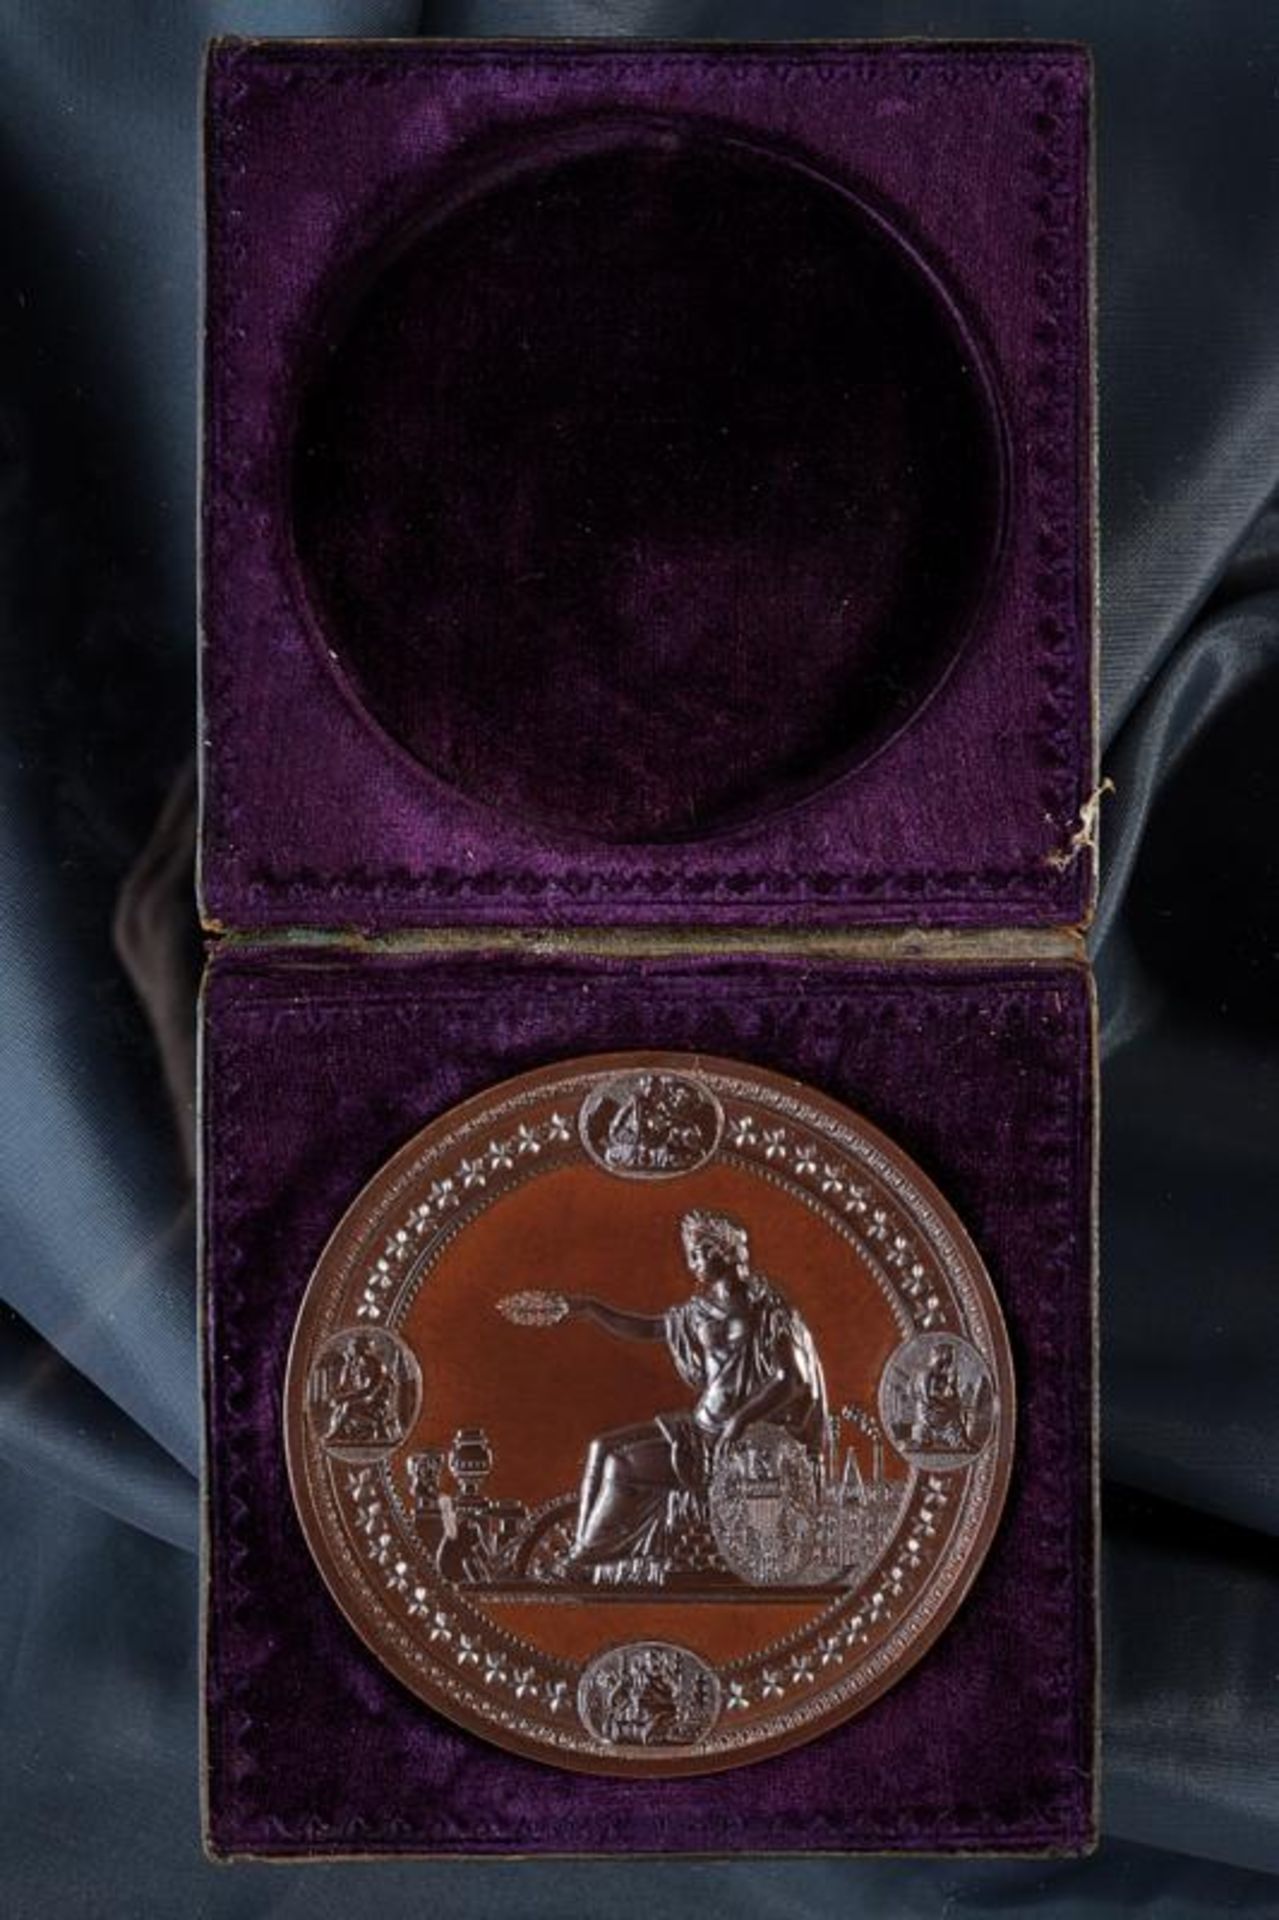 'INTERNATIONAL EXHIBITION PHILADELPHIA 1876' bronze medal